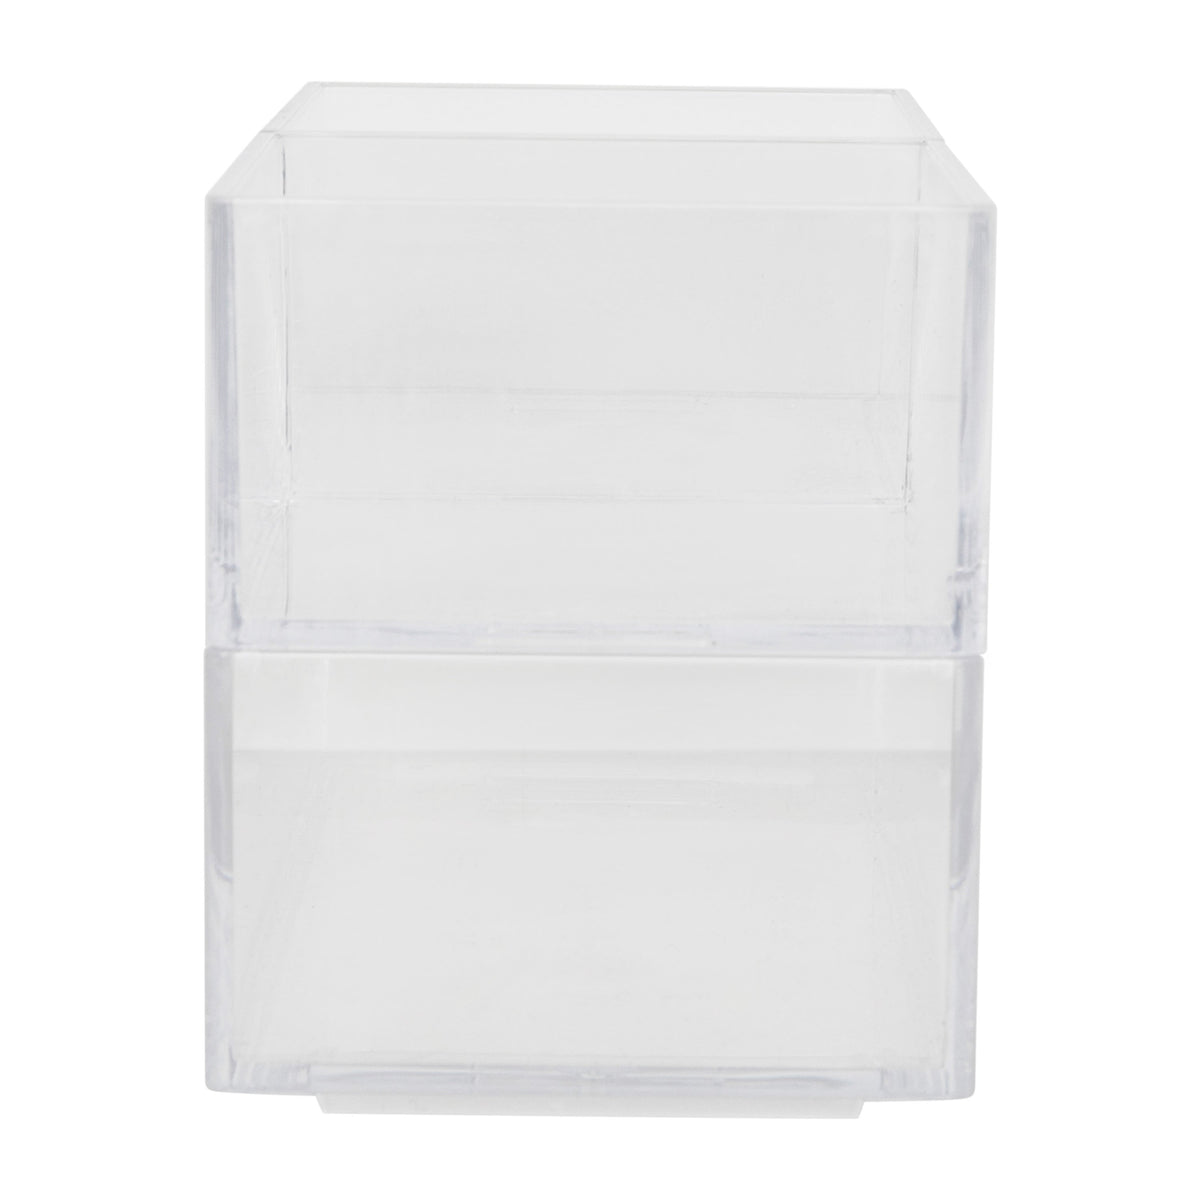 Set of 3 Clear Plastic Stackable Desktop Storage Organizer Trays - 2-S & 1-M